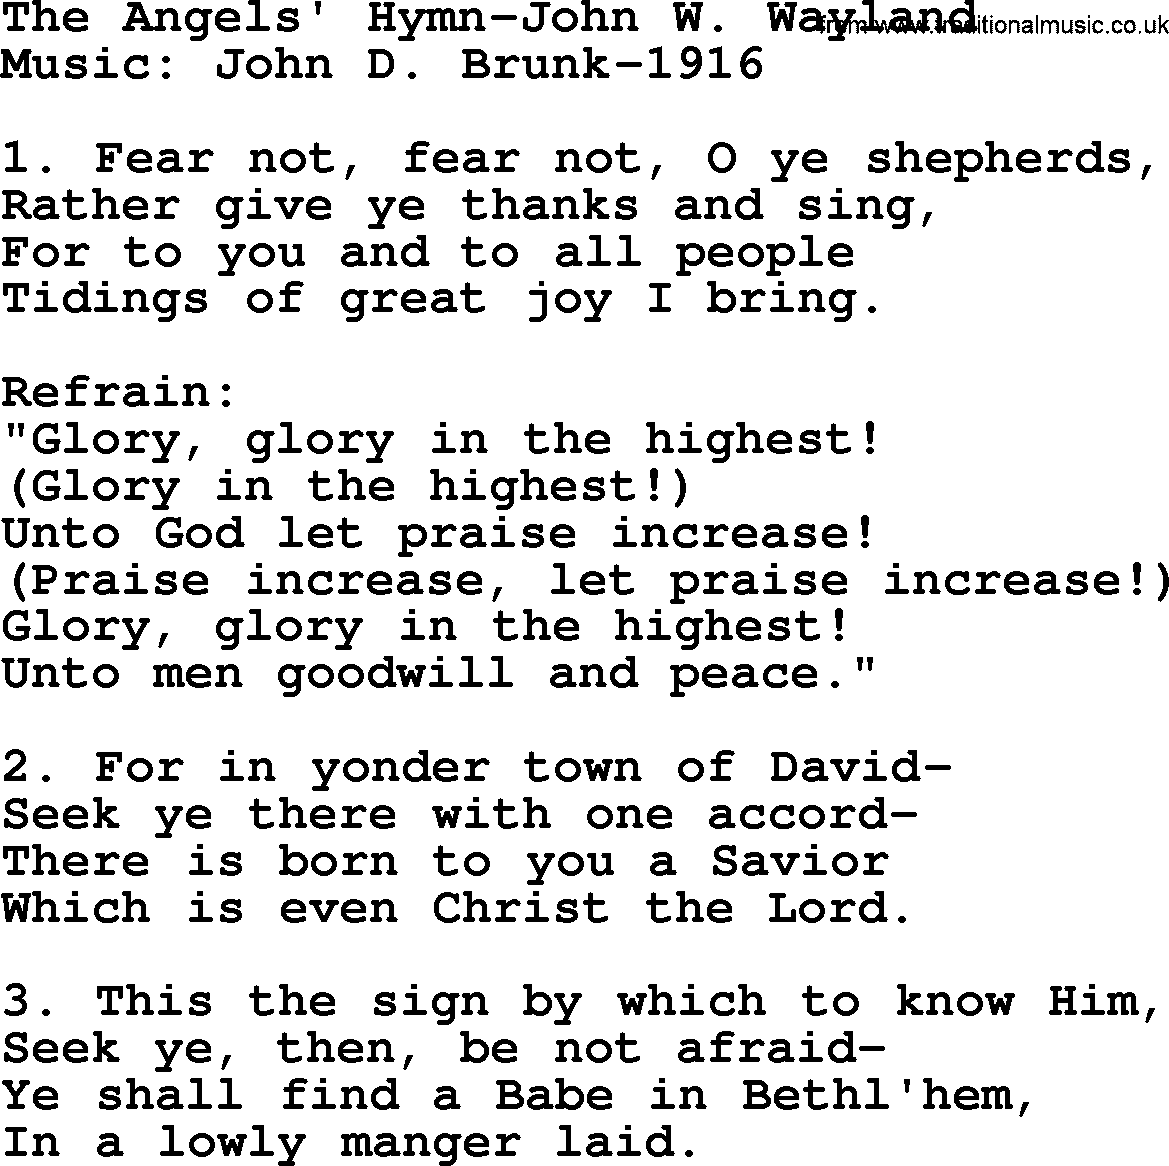 Hymns about Angels, Hymn: The Angels' Hymn-john W. Wayland.txt lyrics with PDF